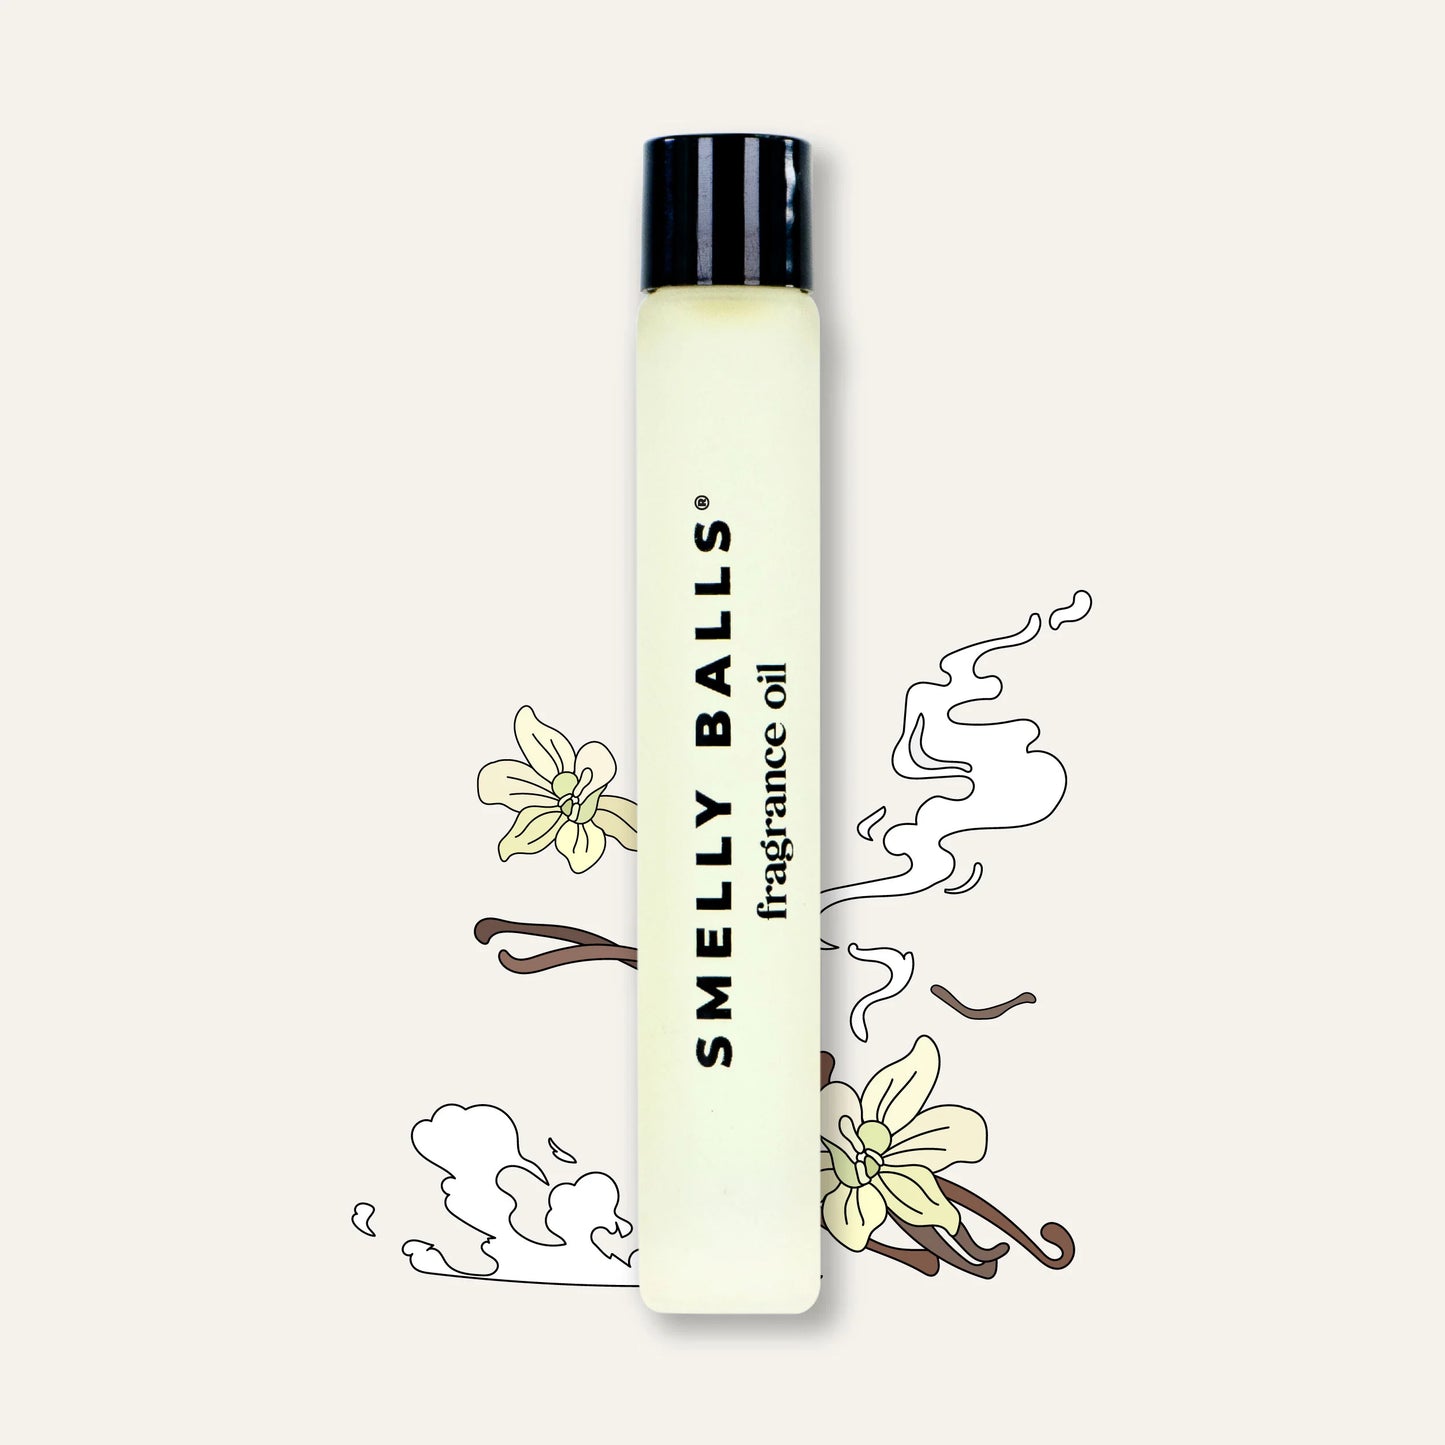 Smelly Balls Fragrance Oil Tabacco Vanilla